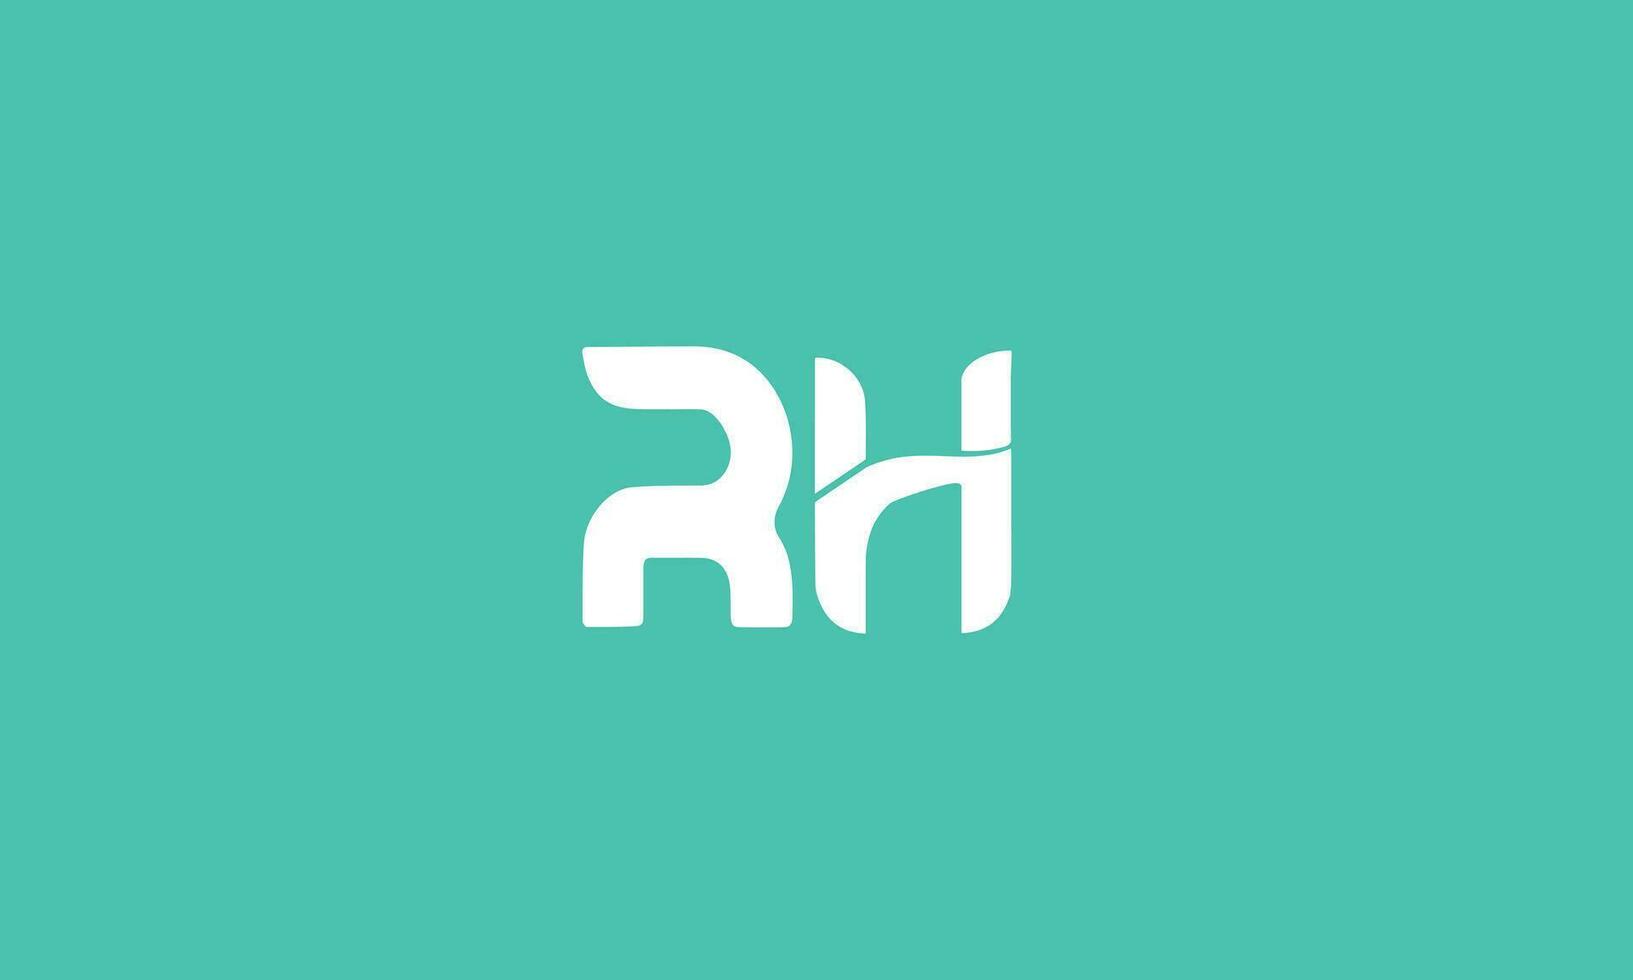 RH, HR, R, H abstract letters logo monogram vector